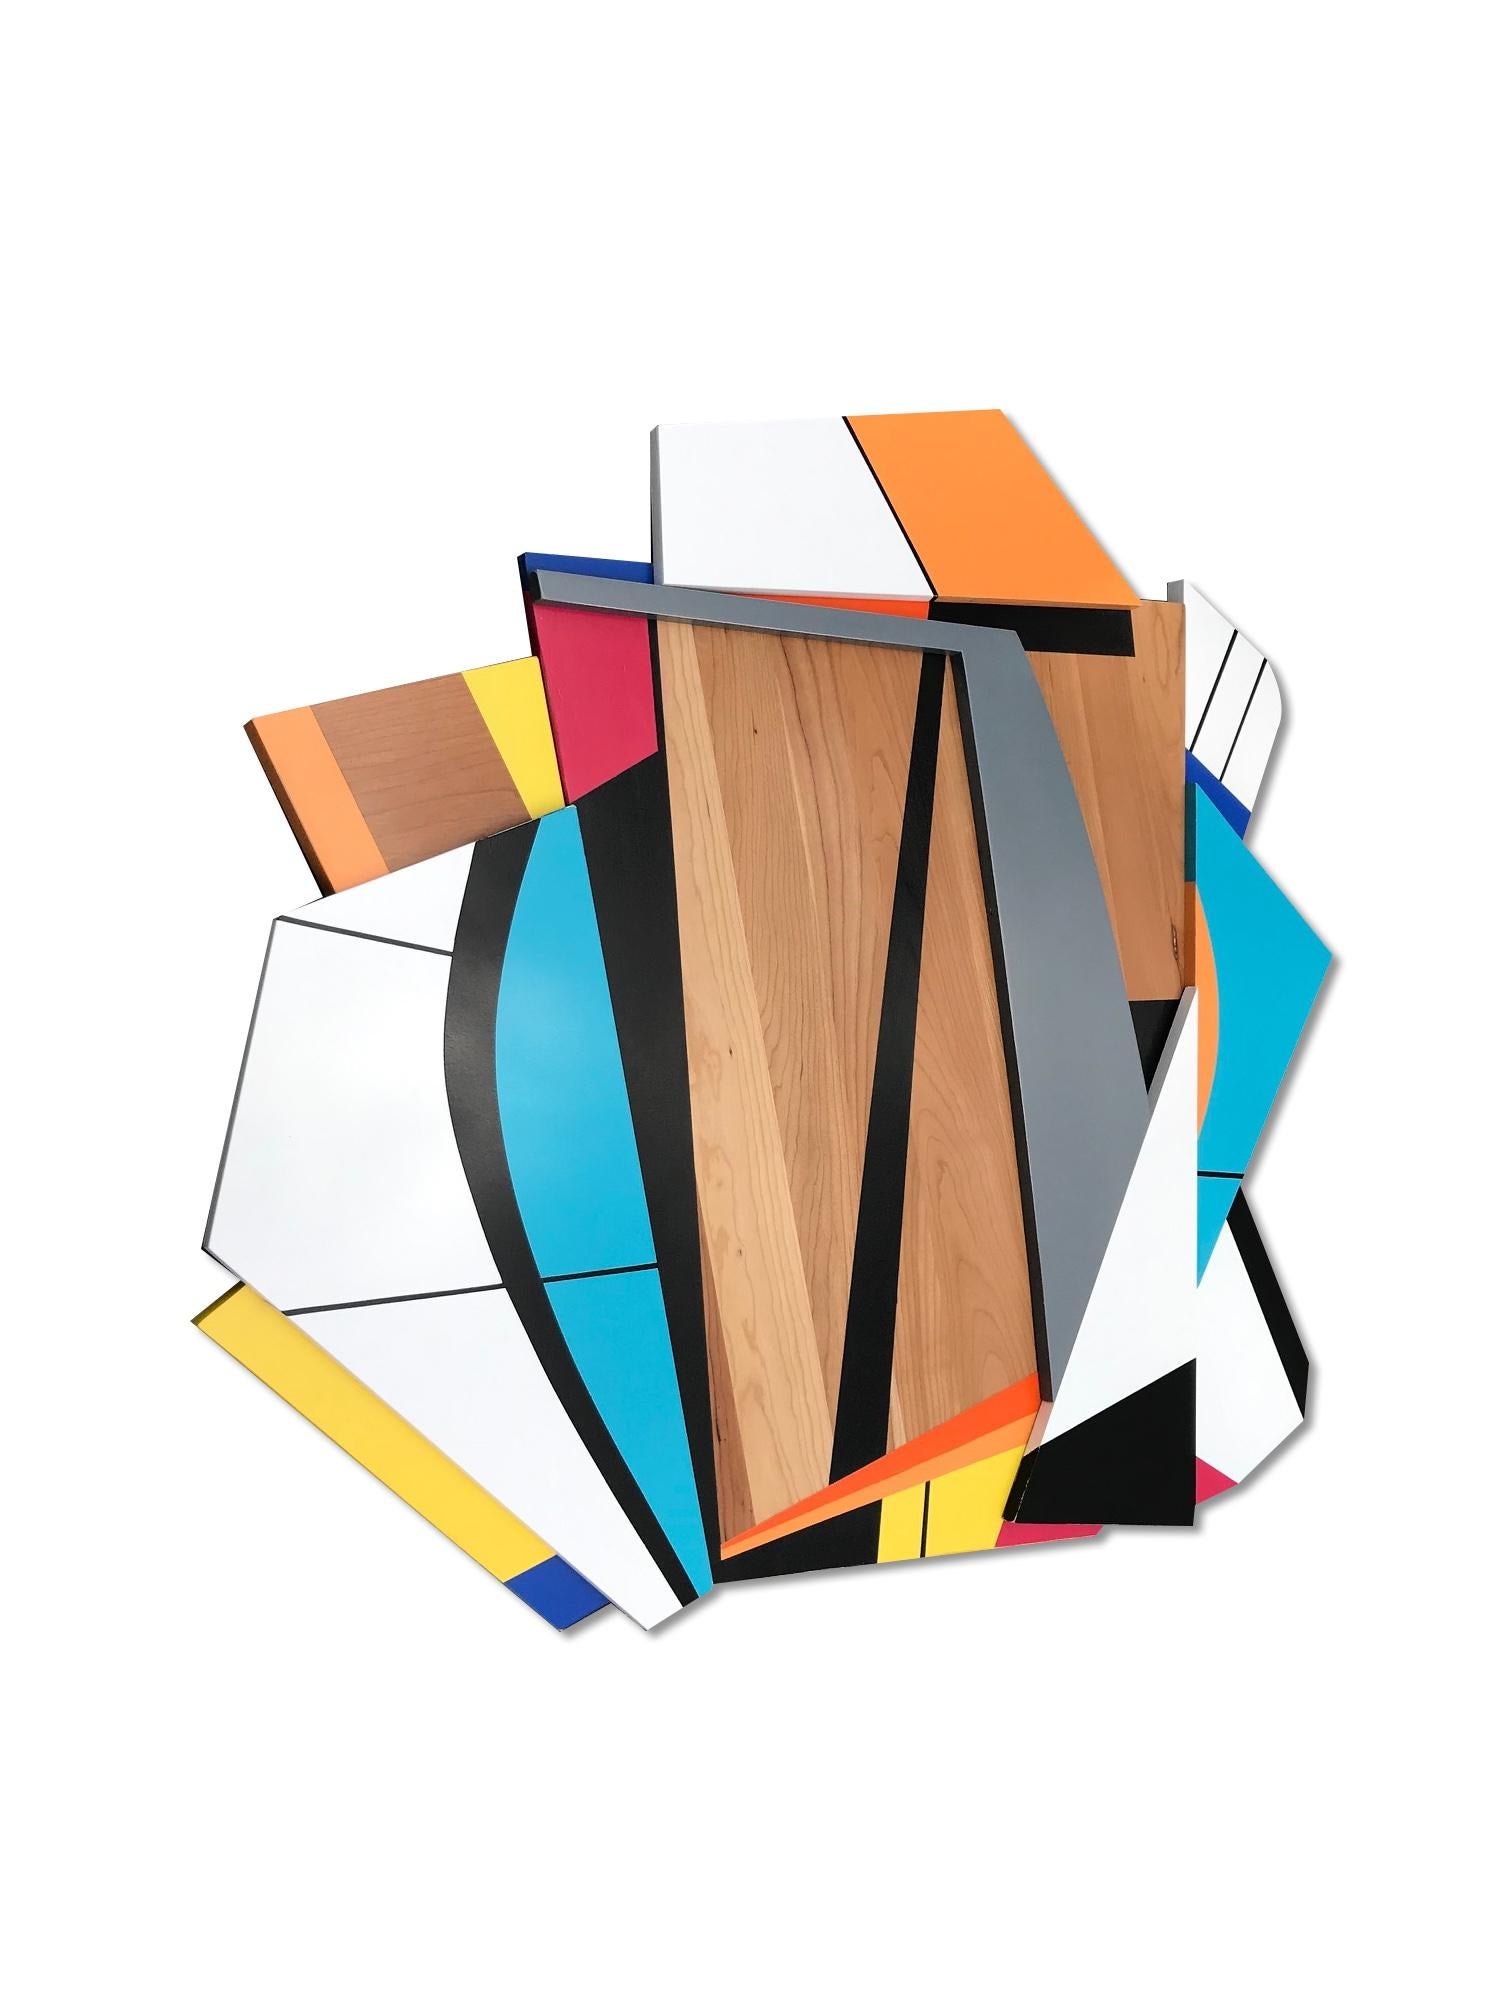 Quiet Riot IV (modern abstract wall sculpture minimal geometric design wood art) 2